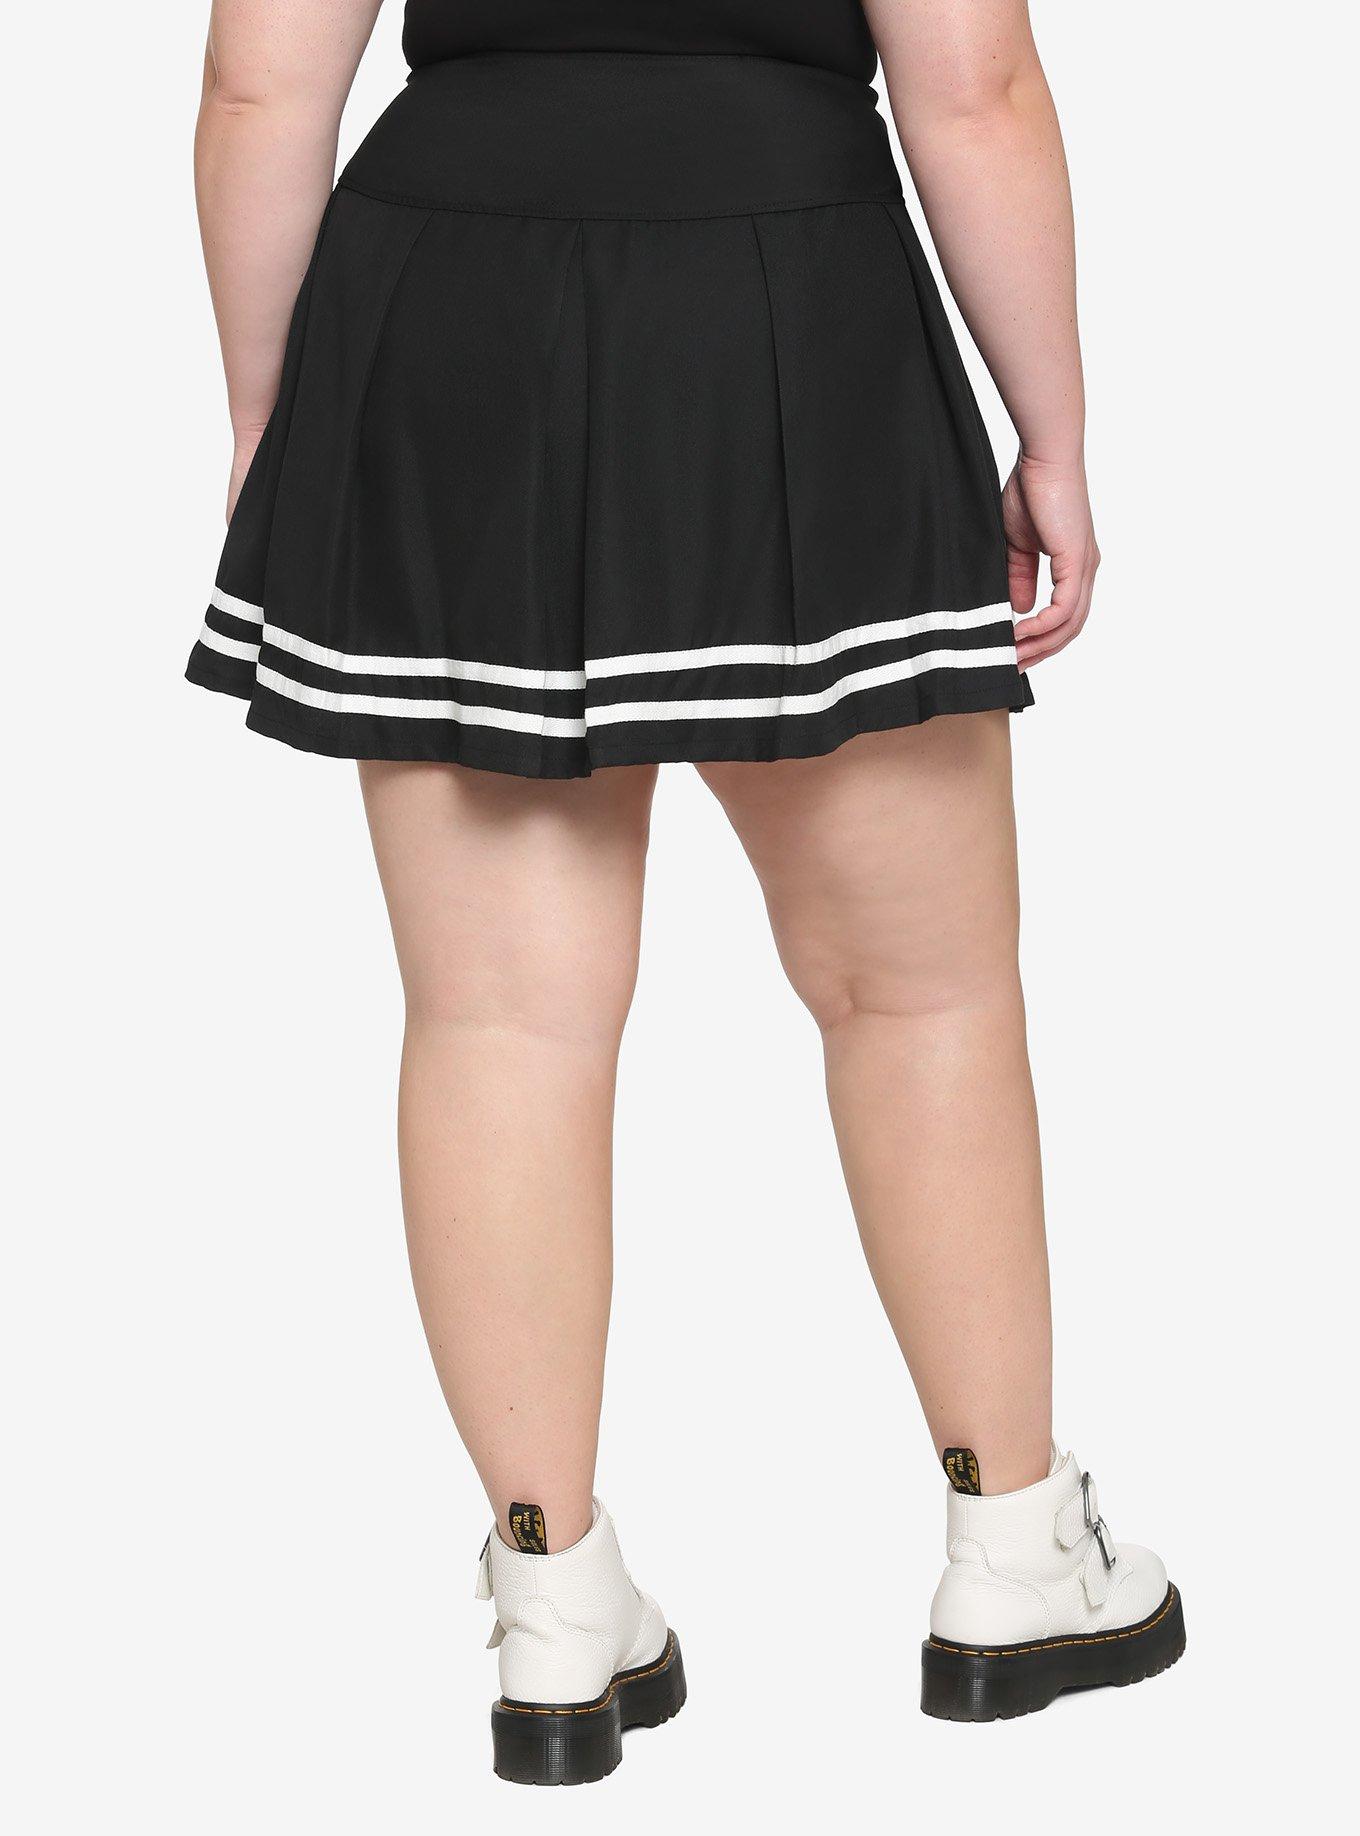 Black & White Lace-Up Pleated Skirt Plus Size, BLACK, alternate